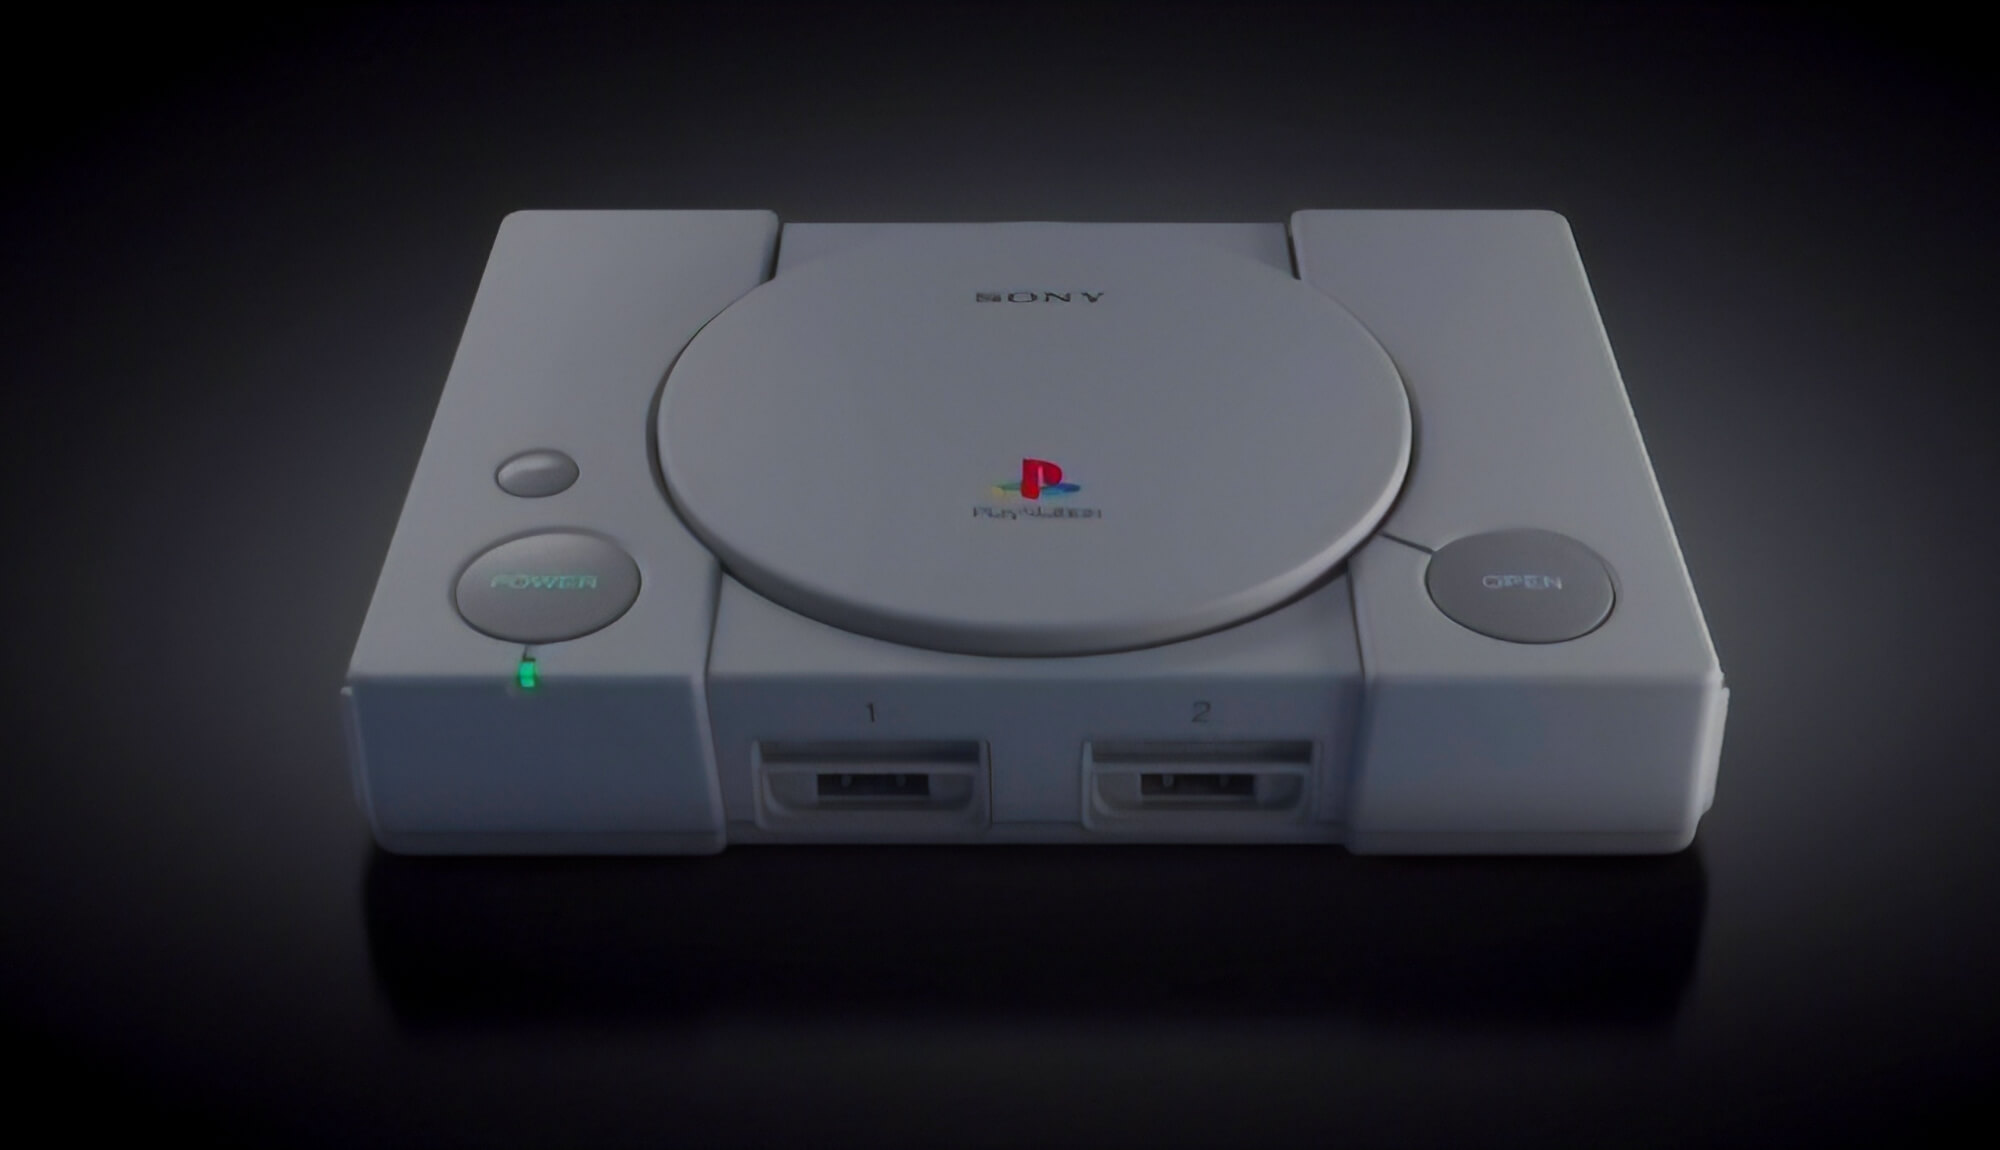 Sony PlayStation Classic резко подешевела до 40% по всему миру